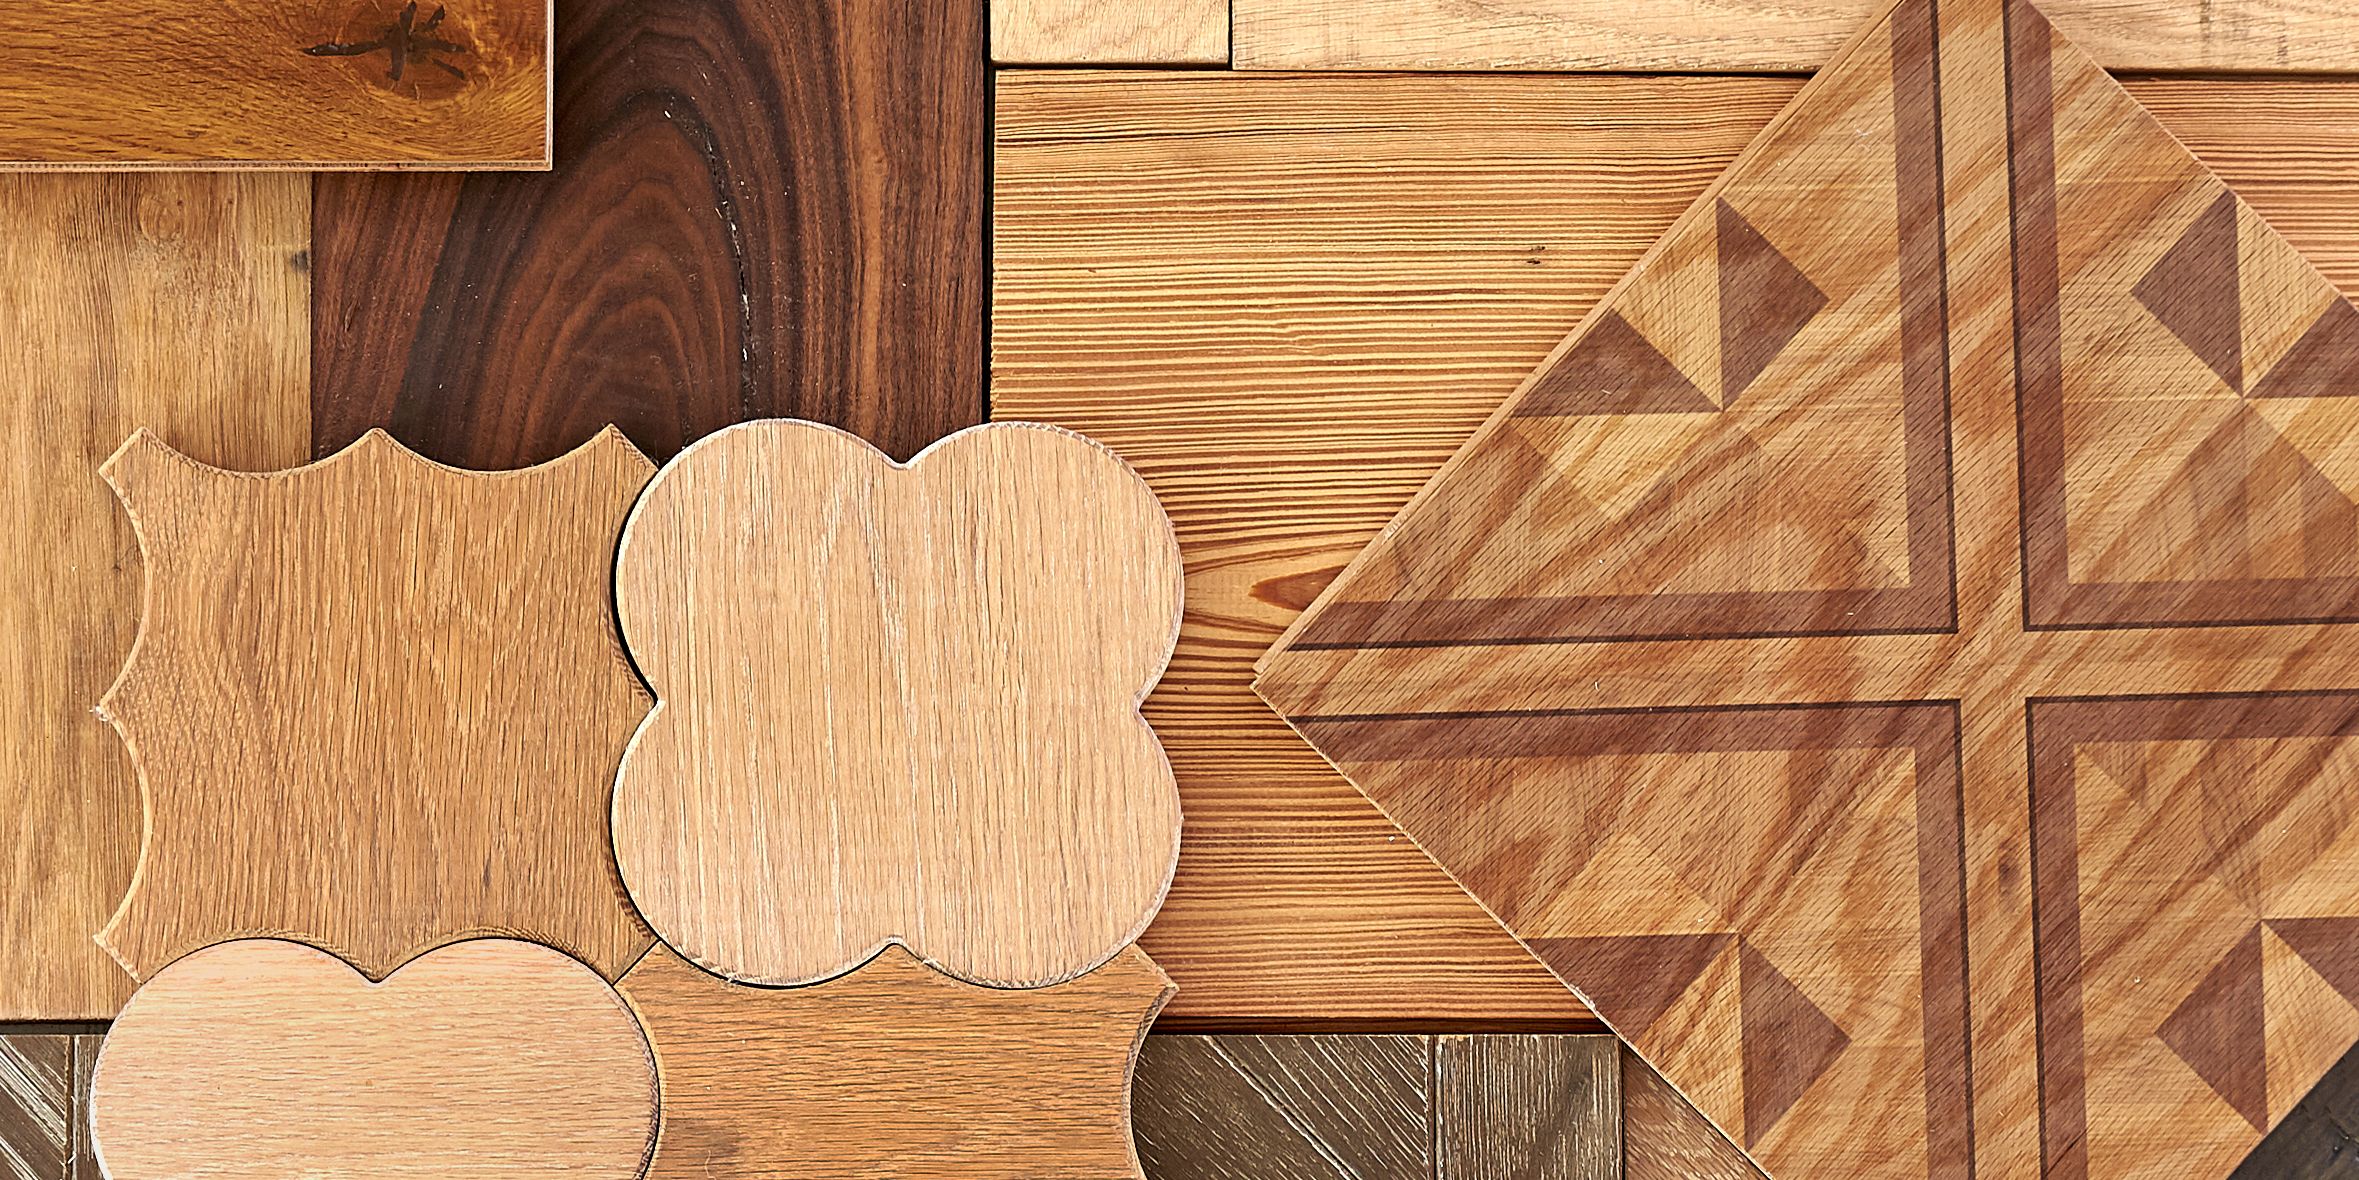 Hardwood Flooring Cost - Types of Hardwood Floors